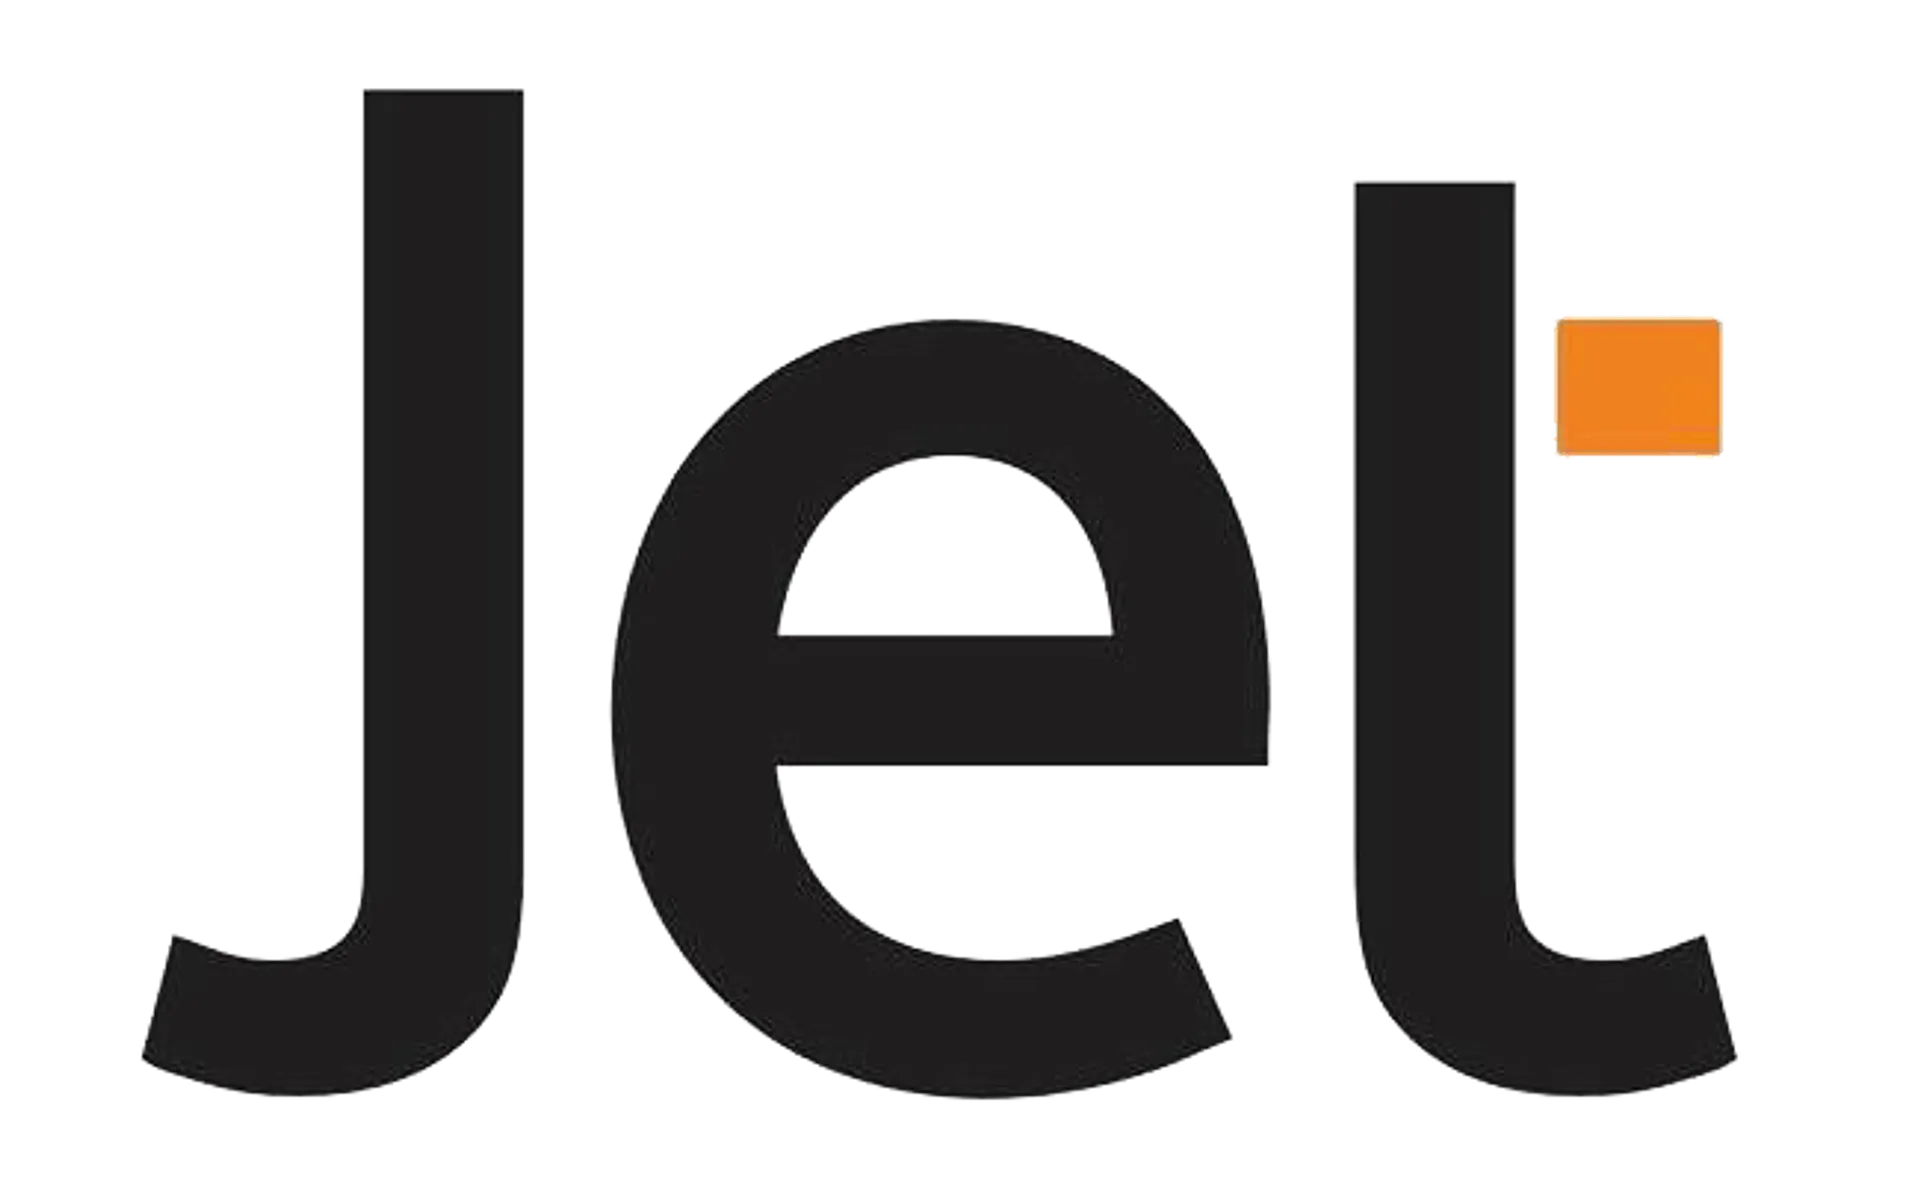 JET logo